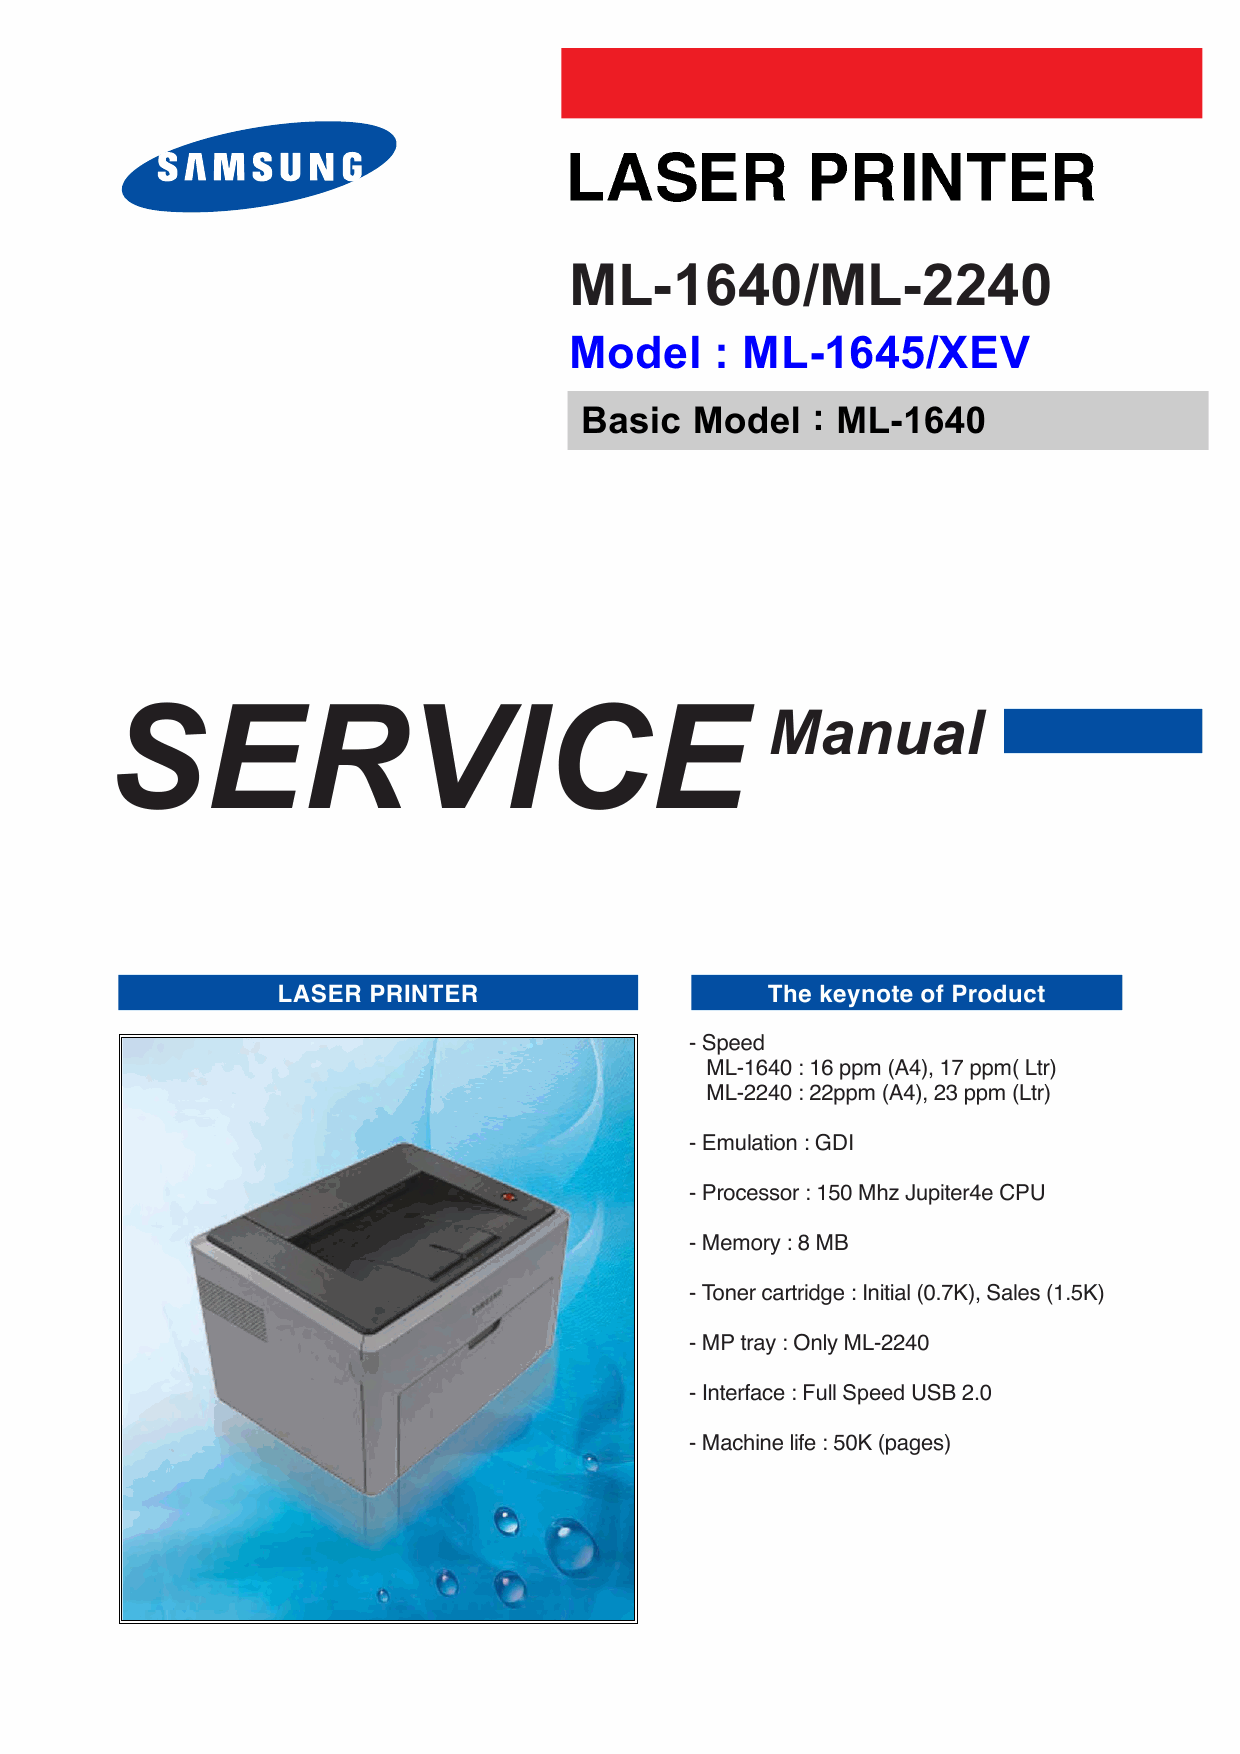 Samsung Laser-Printer ML-1640 2240 Parts and Service Manual-1